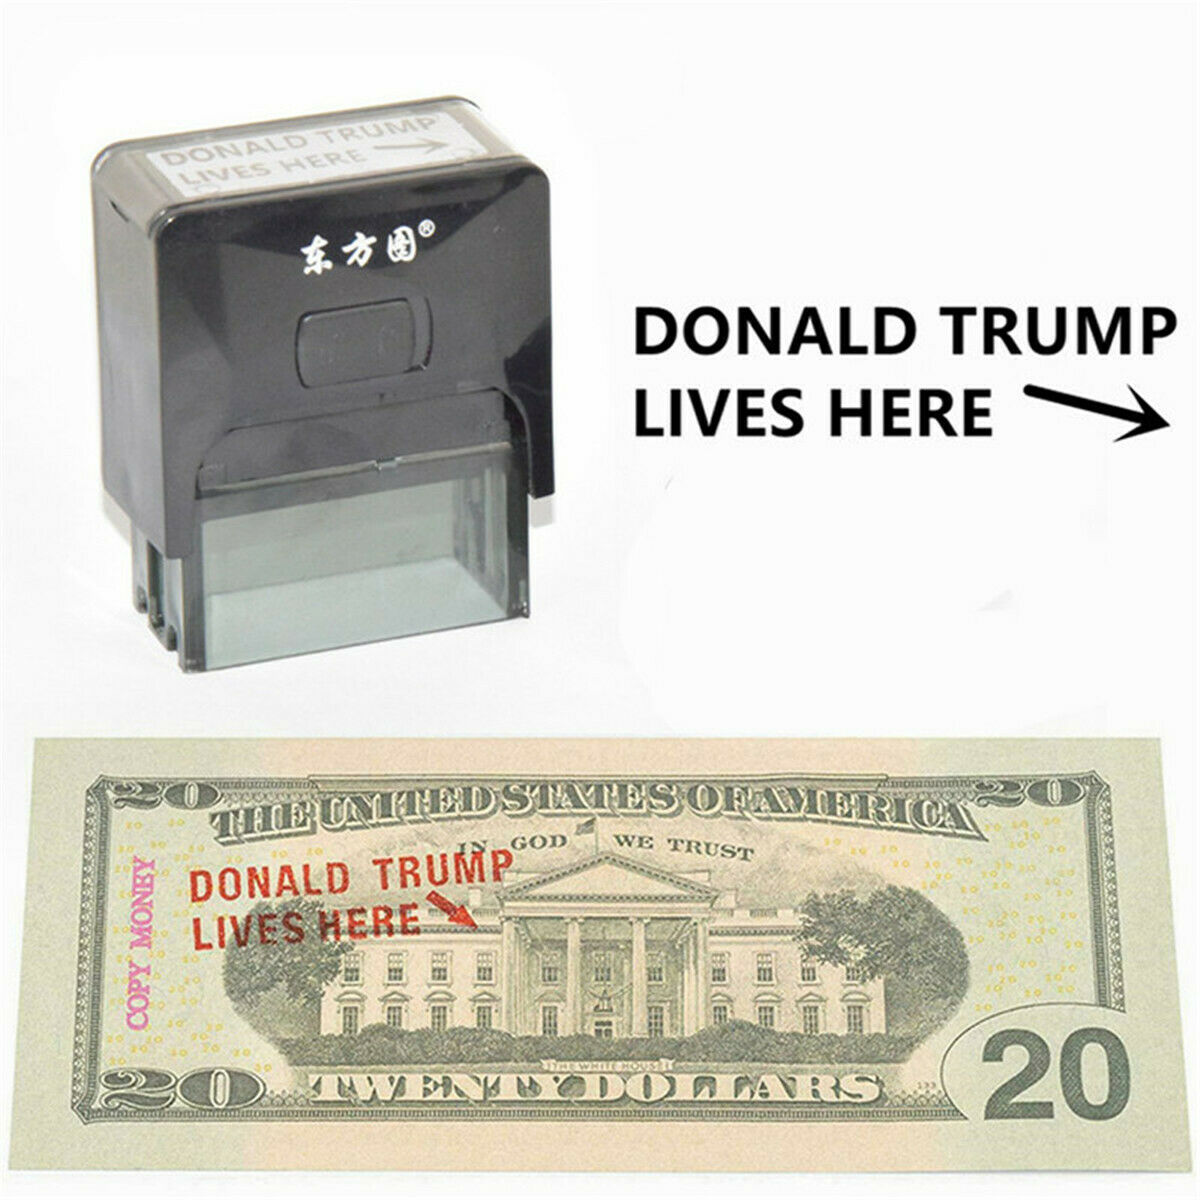 Donald Trump Lives Here Seal Stamp Self Ink Plastic Stamp Black 38*14mm